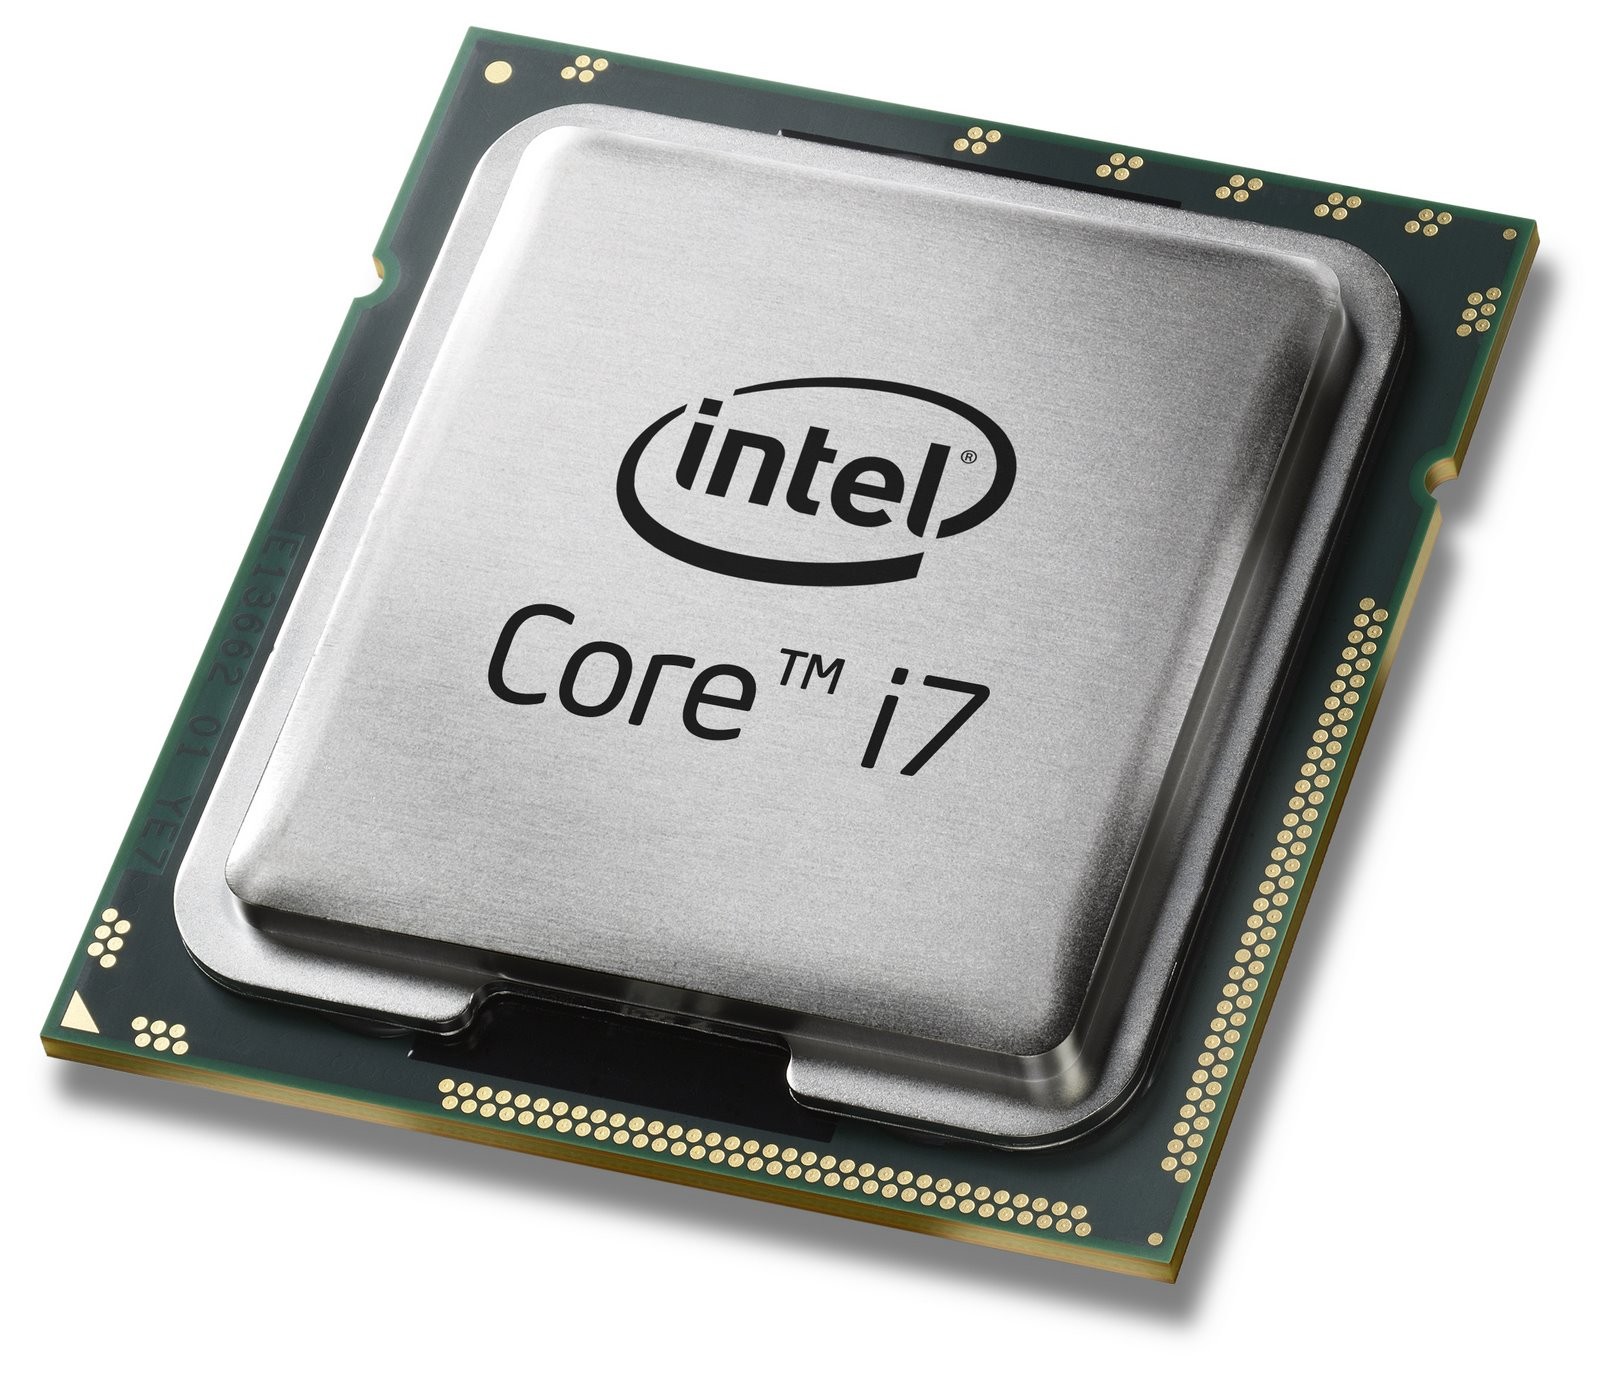 500030326-Intel Core i7-3940XM SR0US 3Ghz 5GT/s Socket G2 Processor-image